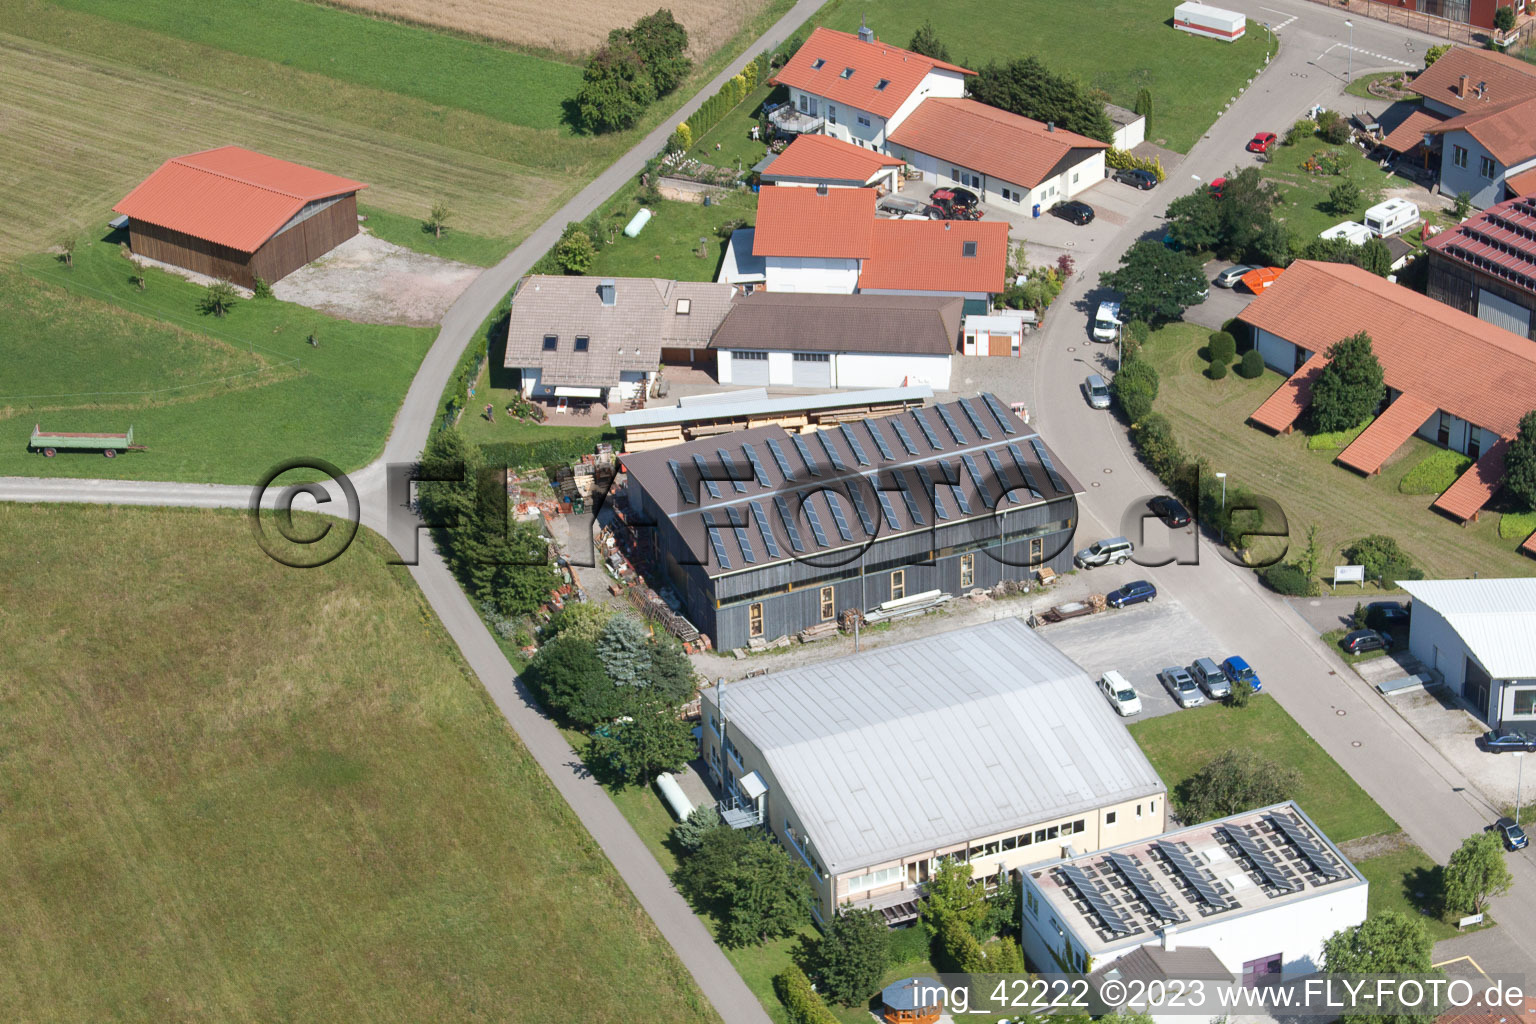 Commercial area in Schwarzenbusch in Pfaffenrot in the state Baden-Wuerttemberg, Germany seen from a drone